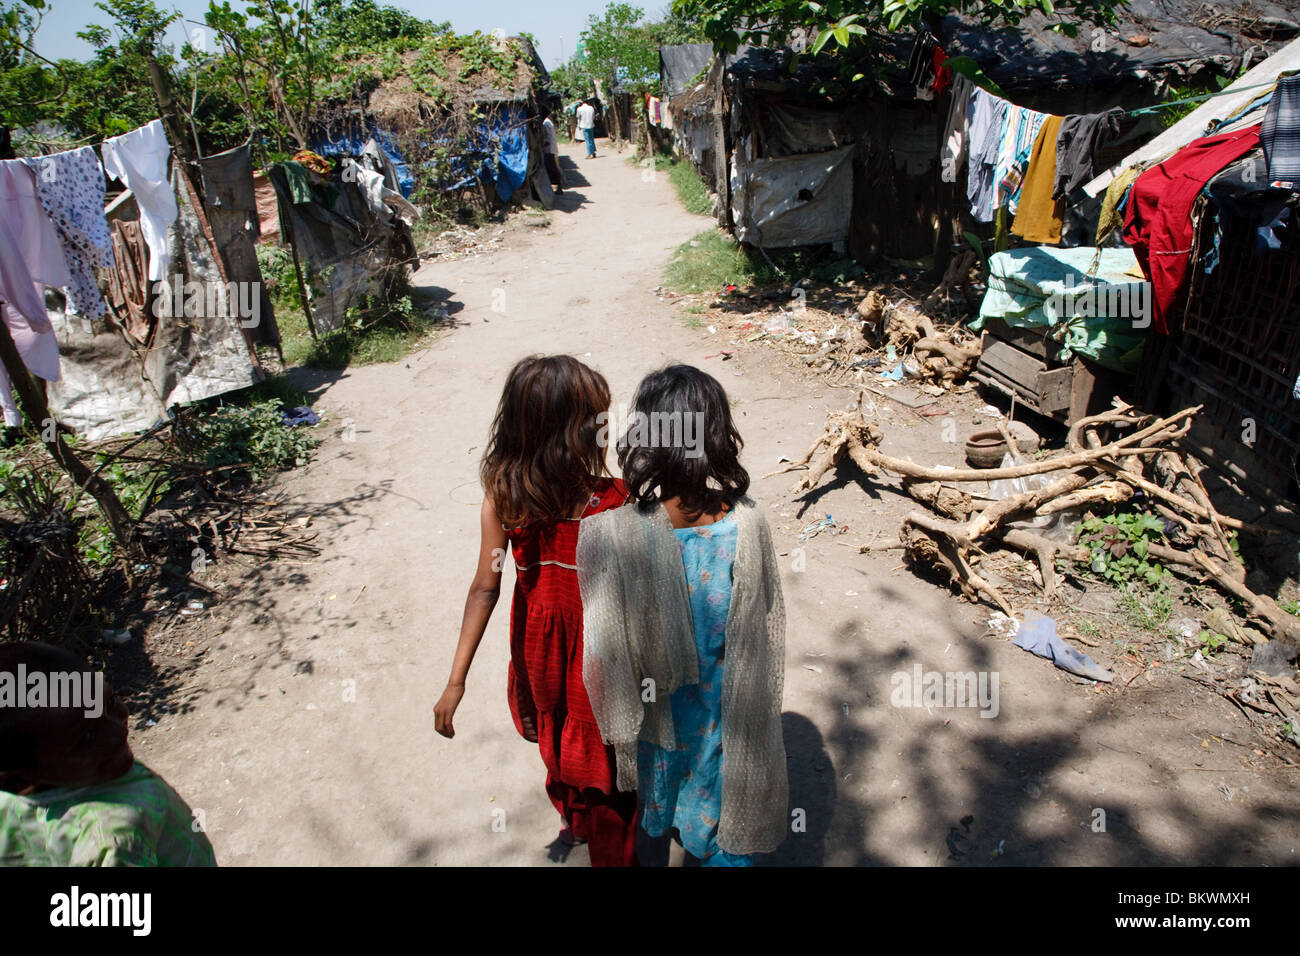 Two girl in a slum area of Kolkata, India. Stock Photo